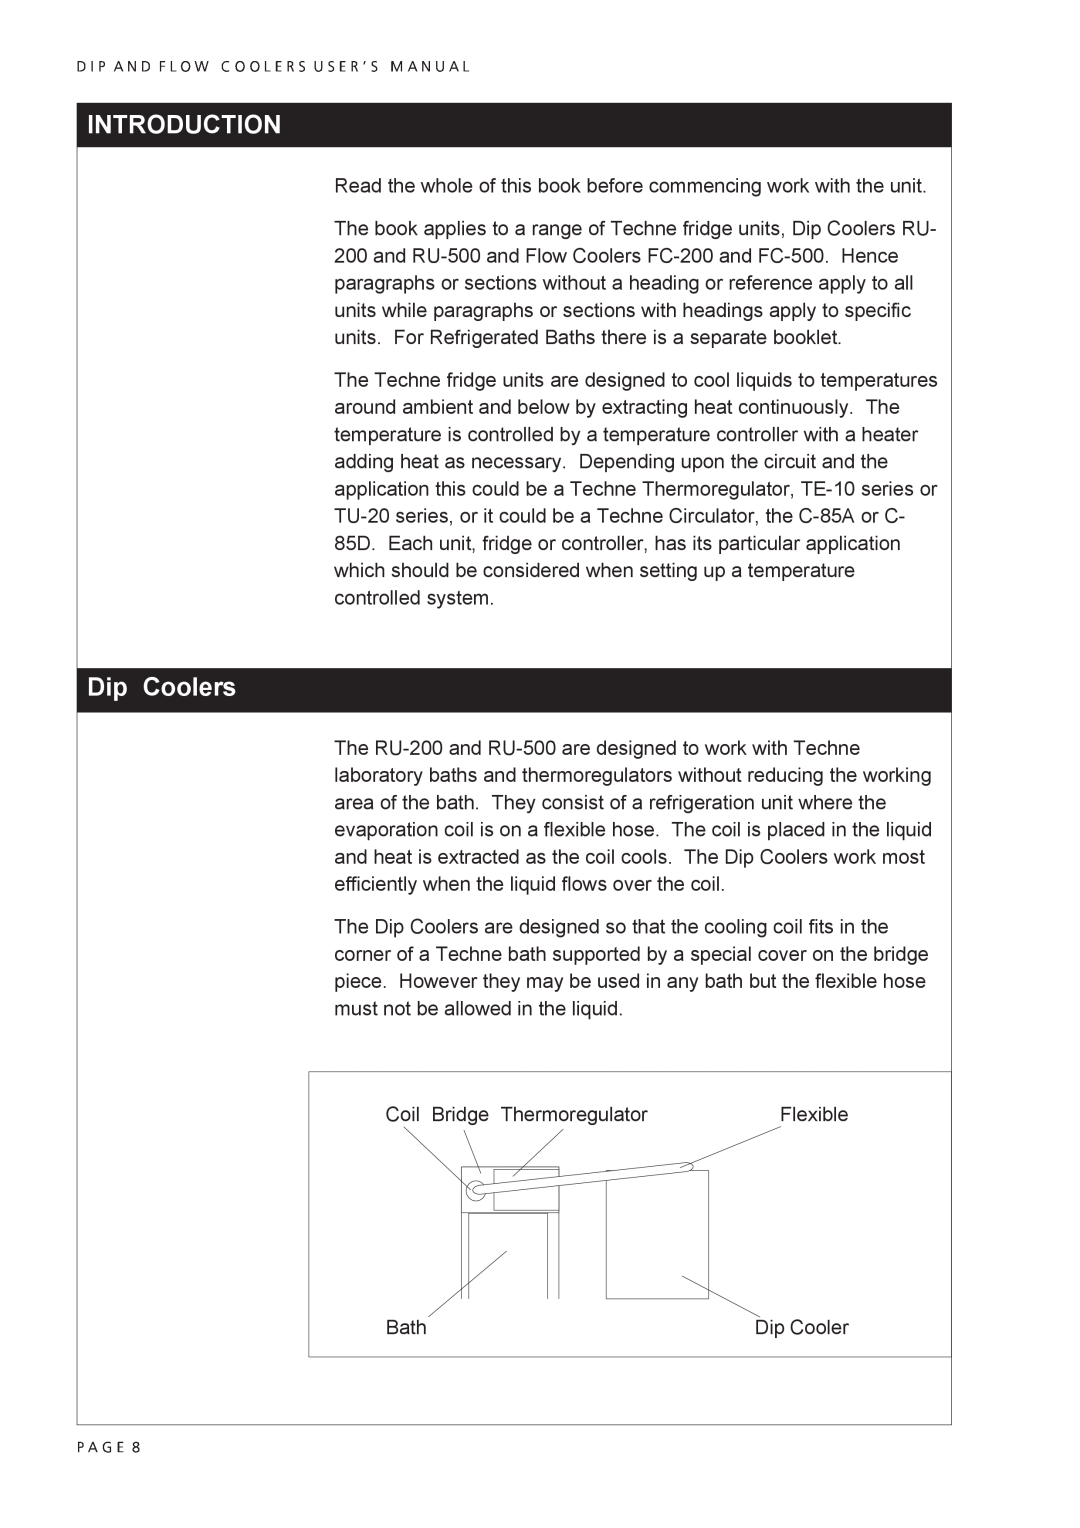 MASS Engineered Design RU-200 user manual Introduction, Dip Coolers 